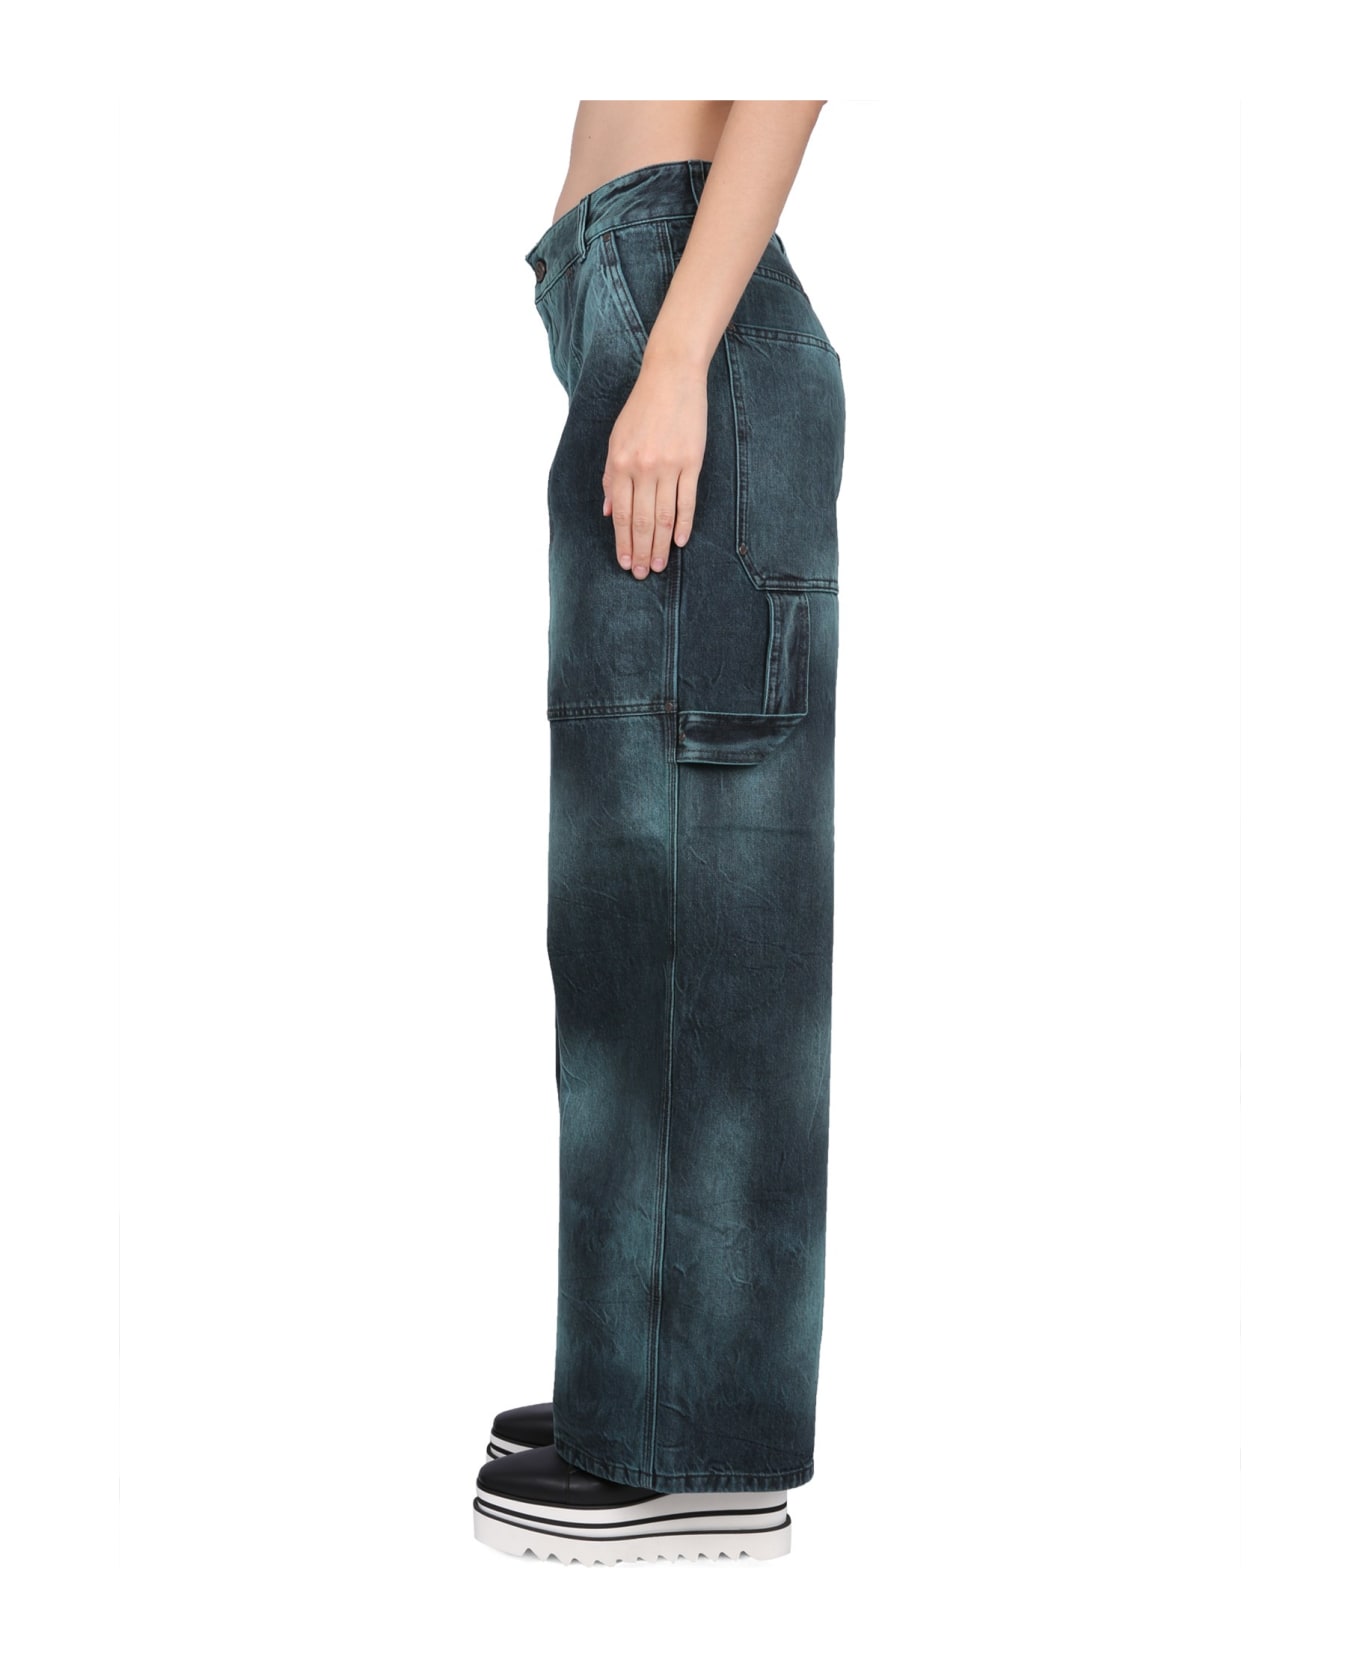 Stella McCartney Jeans Workwear - green デニム